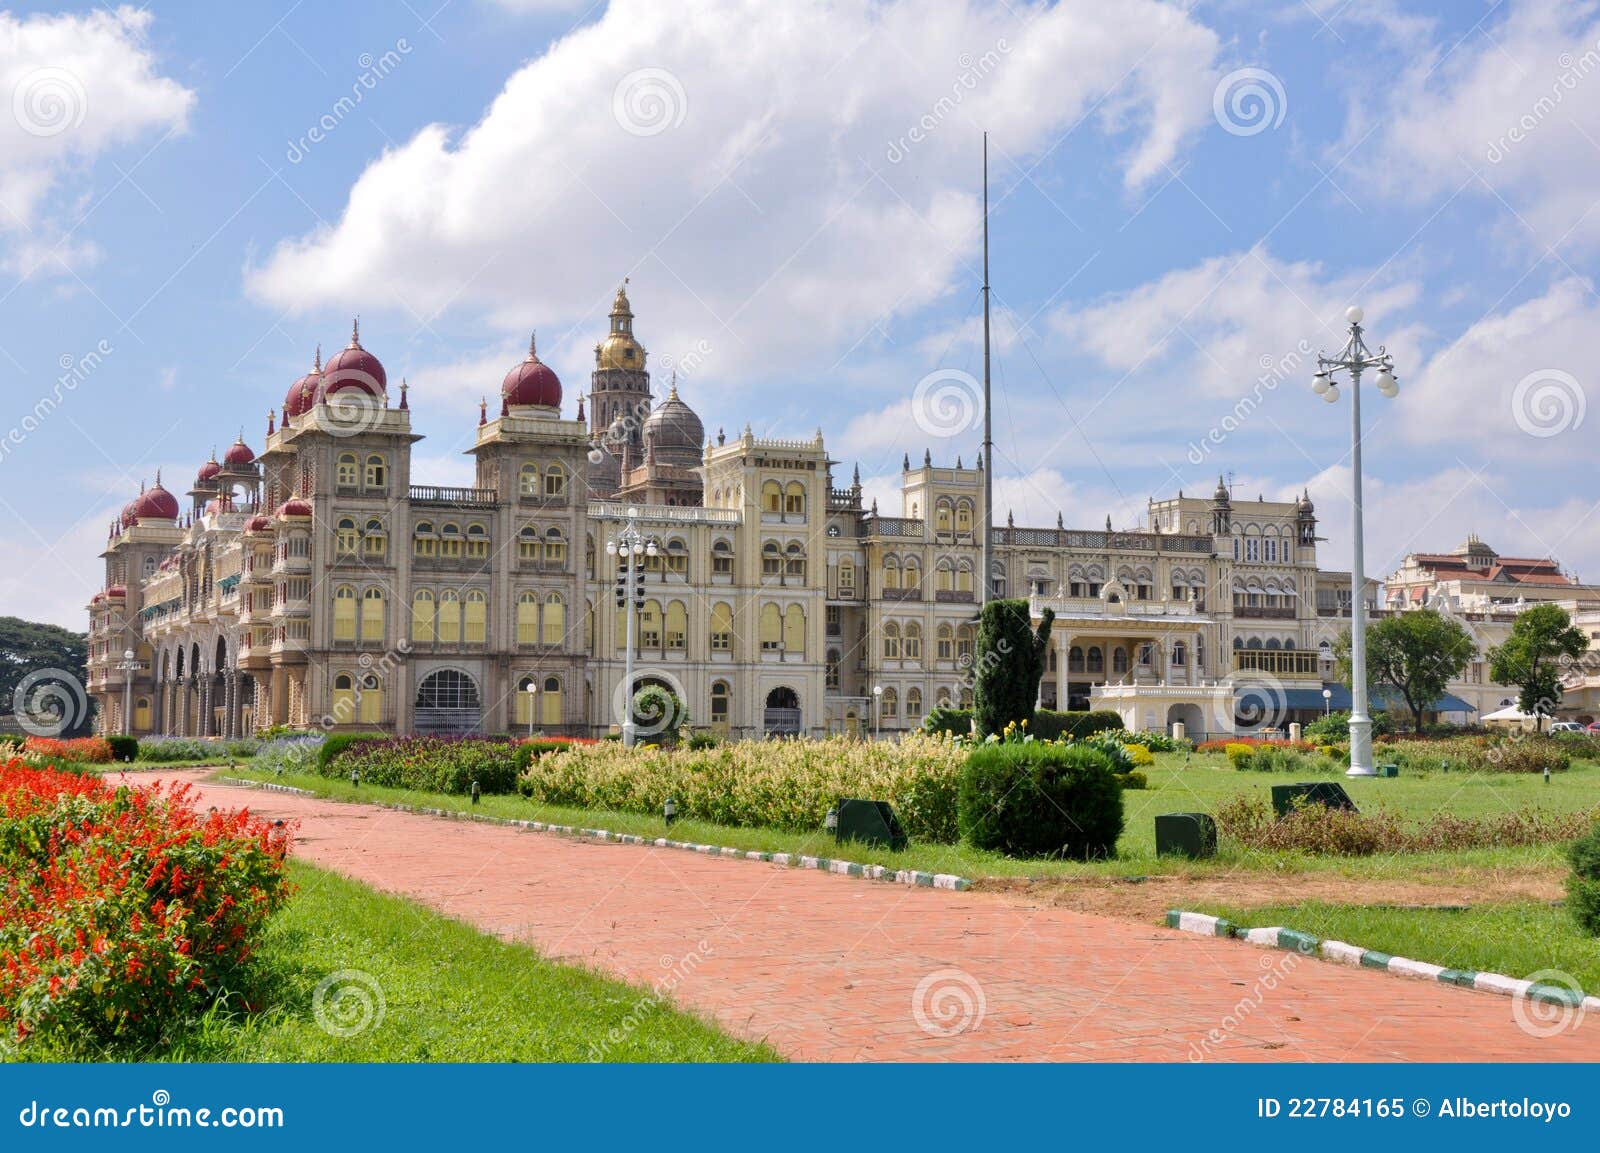 mysore palace, karnataka, india